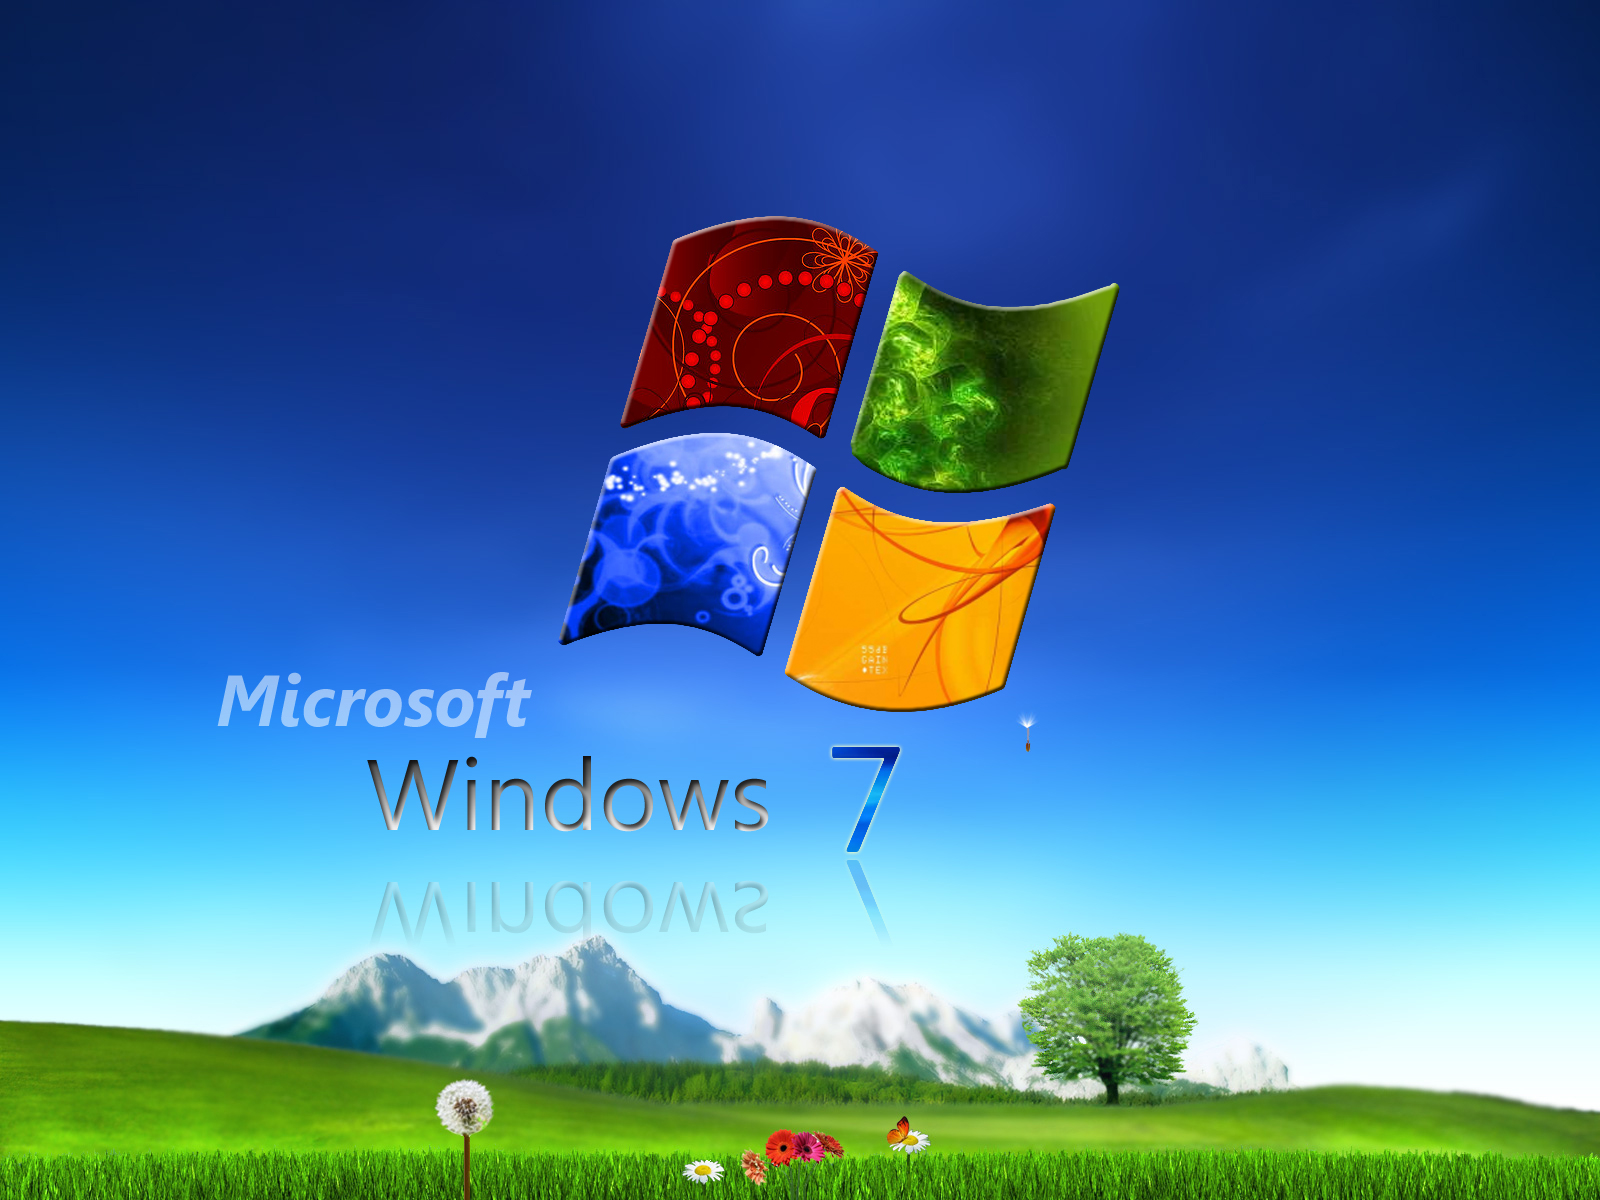 Windows Microsoft Image Wallpaper Brands And Logos